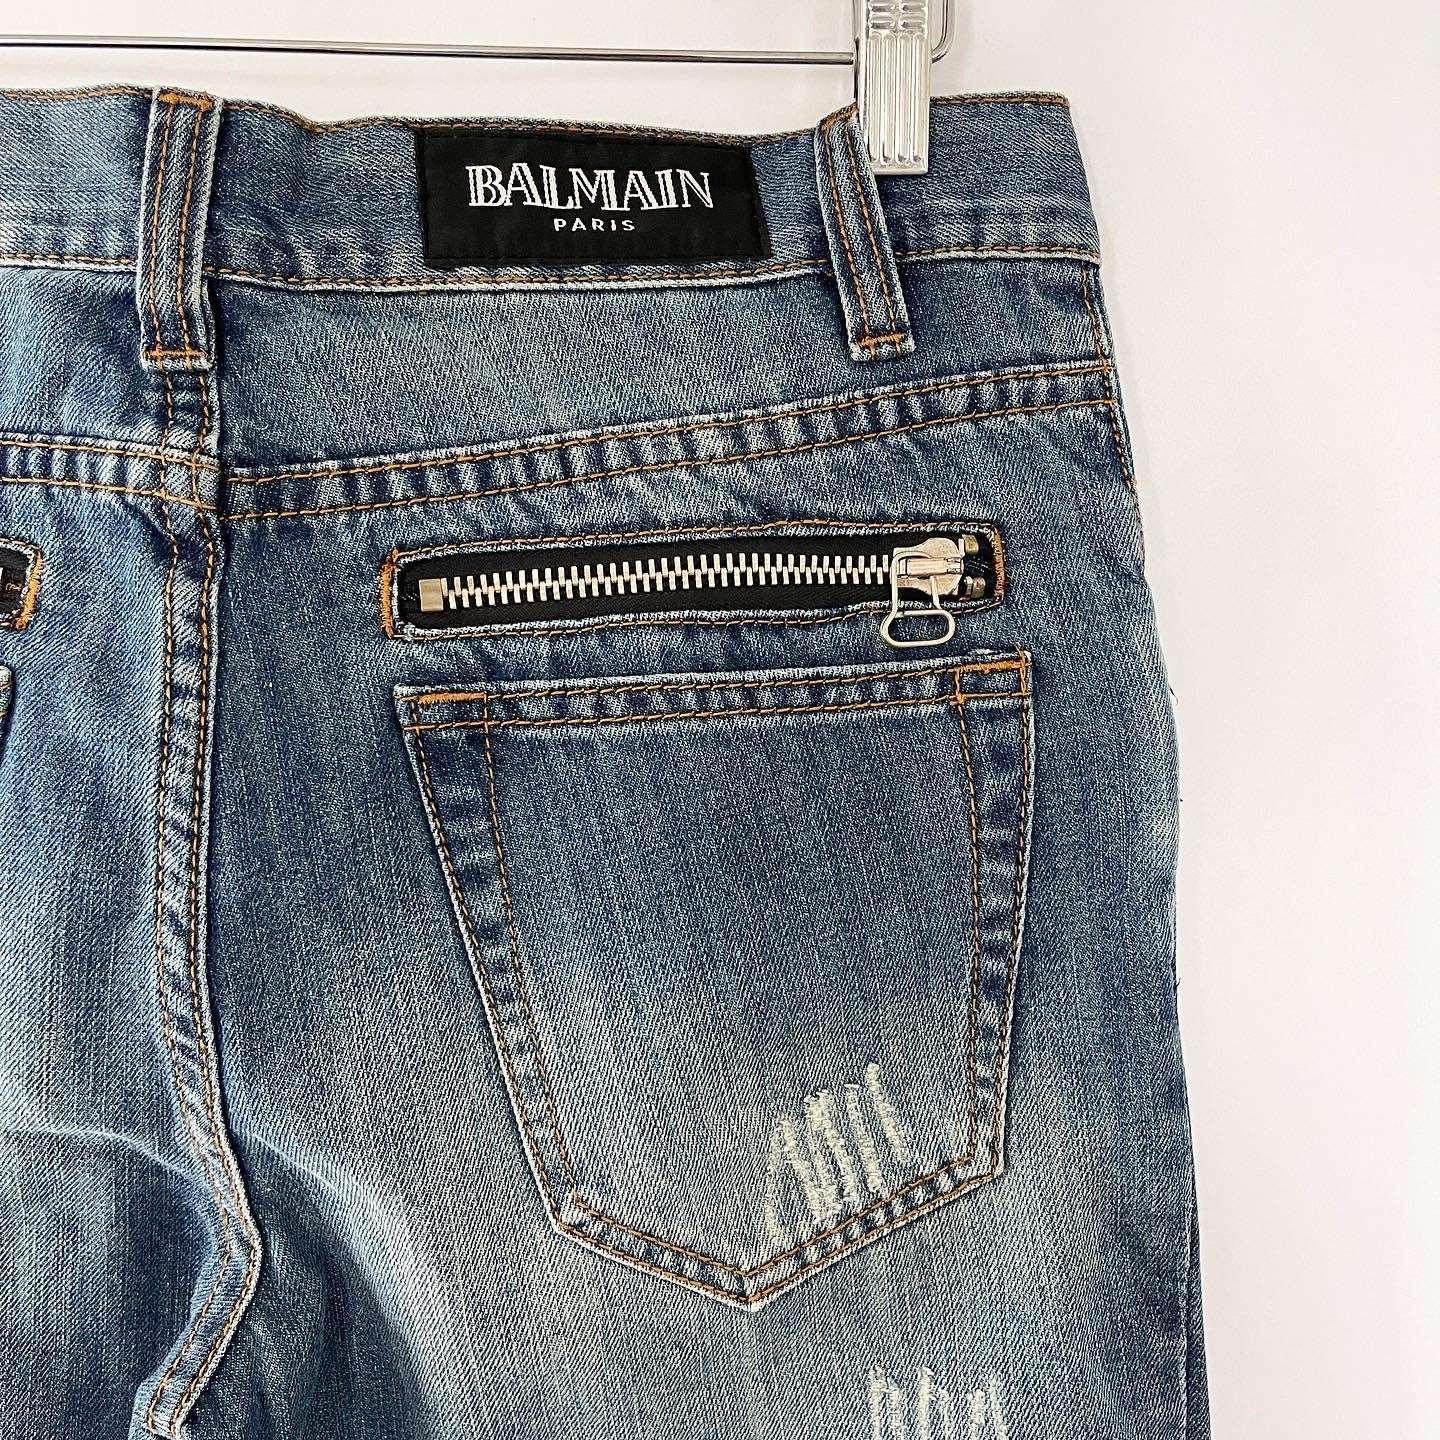 BALMAIN - BALMAIN Jeans - AVVIIVVA.COM